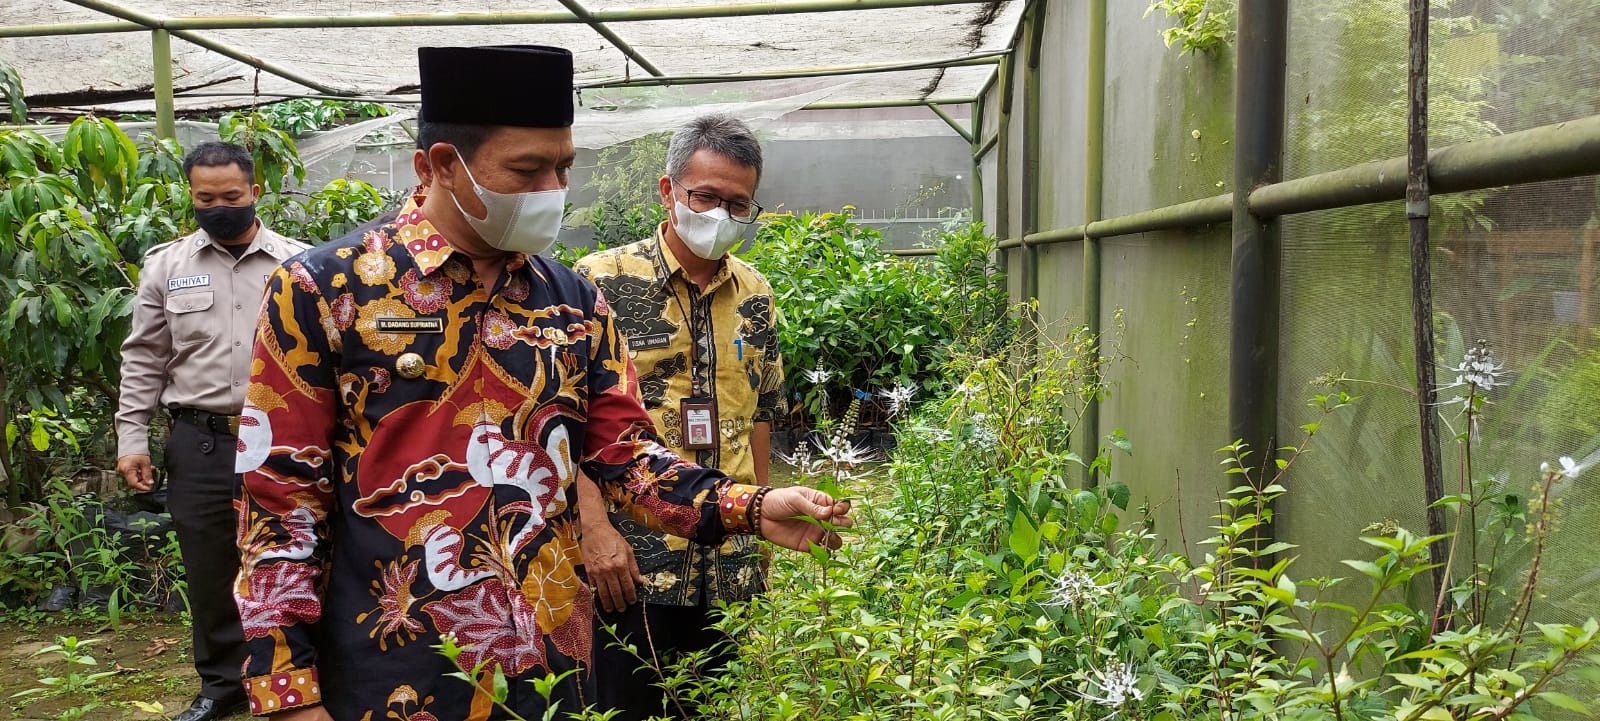 Bupati Bandung Dadang Supriatna, melihat tanaman obat dan buah-buahan yang ada di greenhouse milik Dinas Pertanian Kabupaten Bandung. (Yully S Yulianty/Jabar Ekspres)